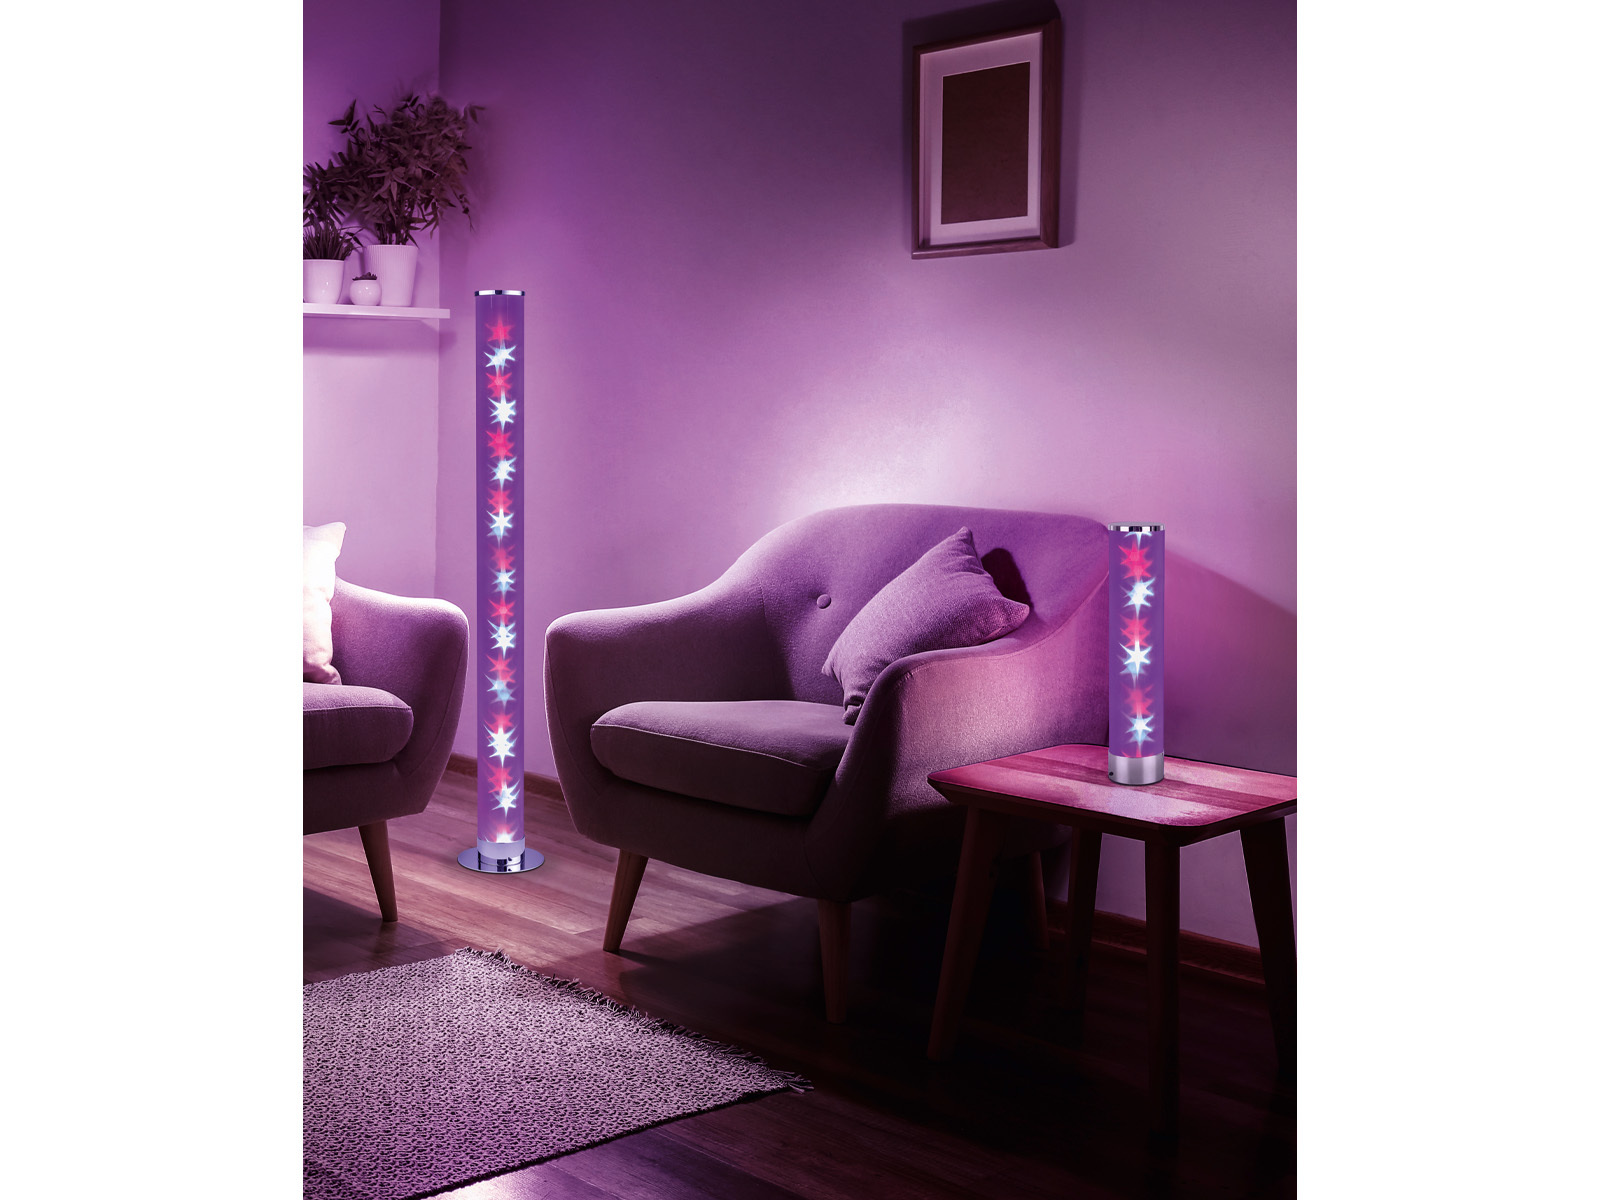 Coole LED Hologramm Jugendzimmer Stehlampen & Tischbeleuchtung mit